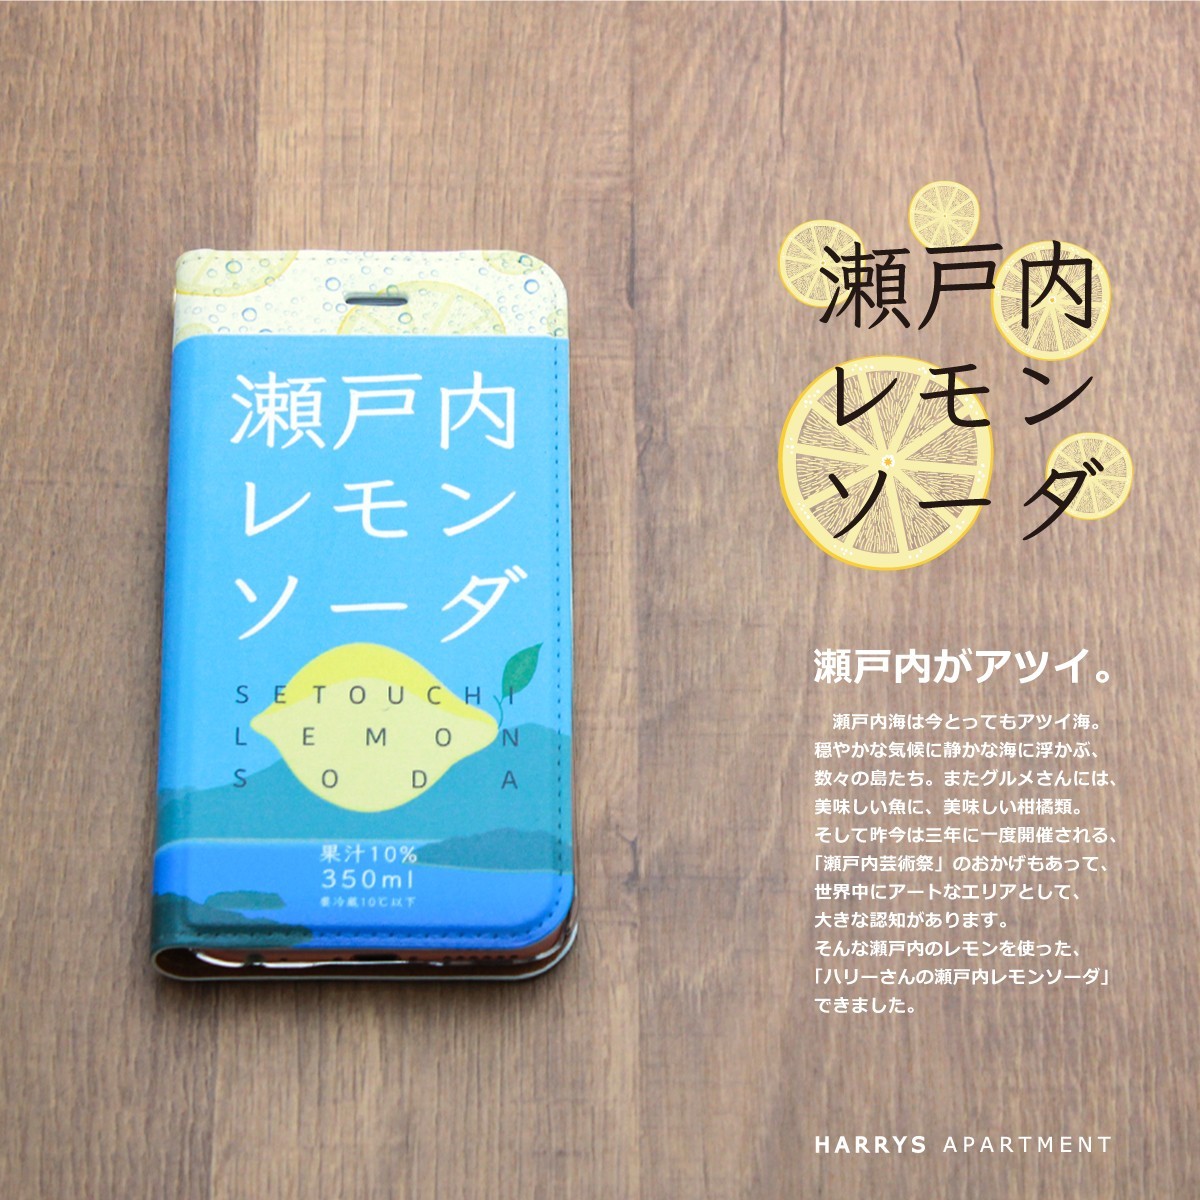 Iphone12 ケース 手帳 瀬戸内レモン Iichi ハンドメイド クラフト作品 手仕事品の通販